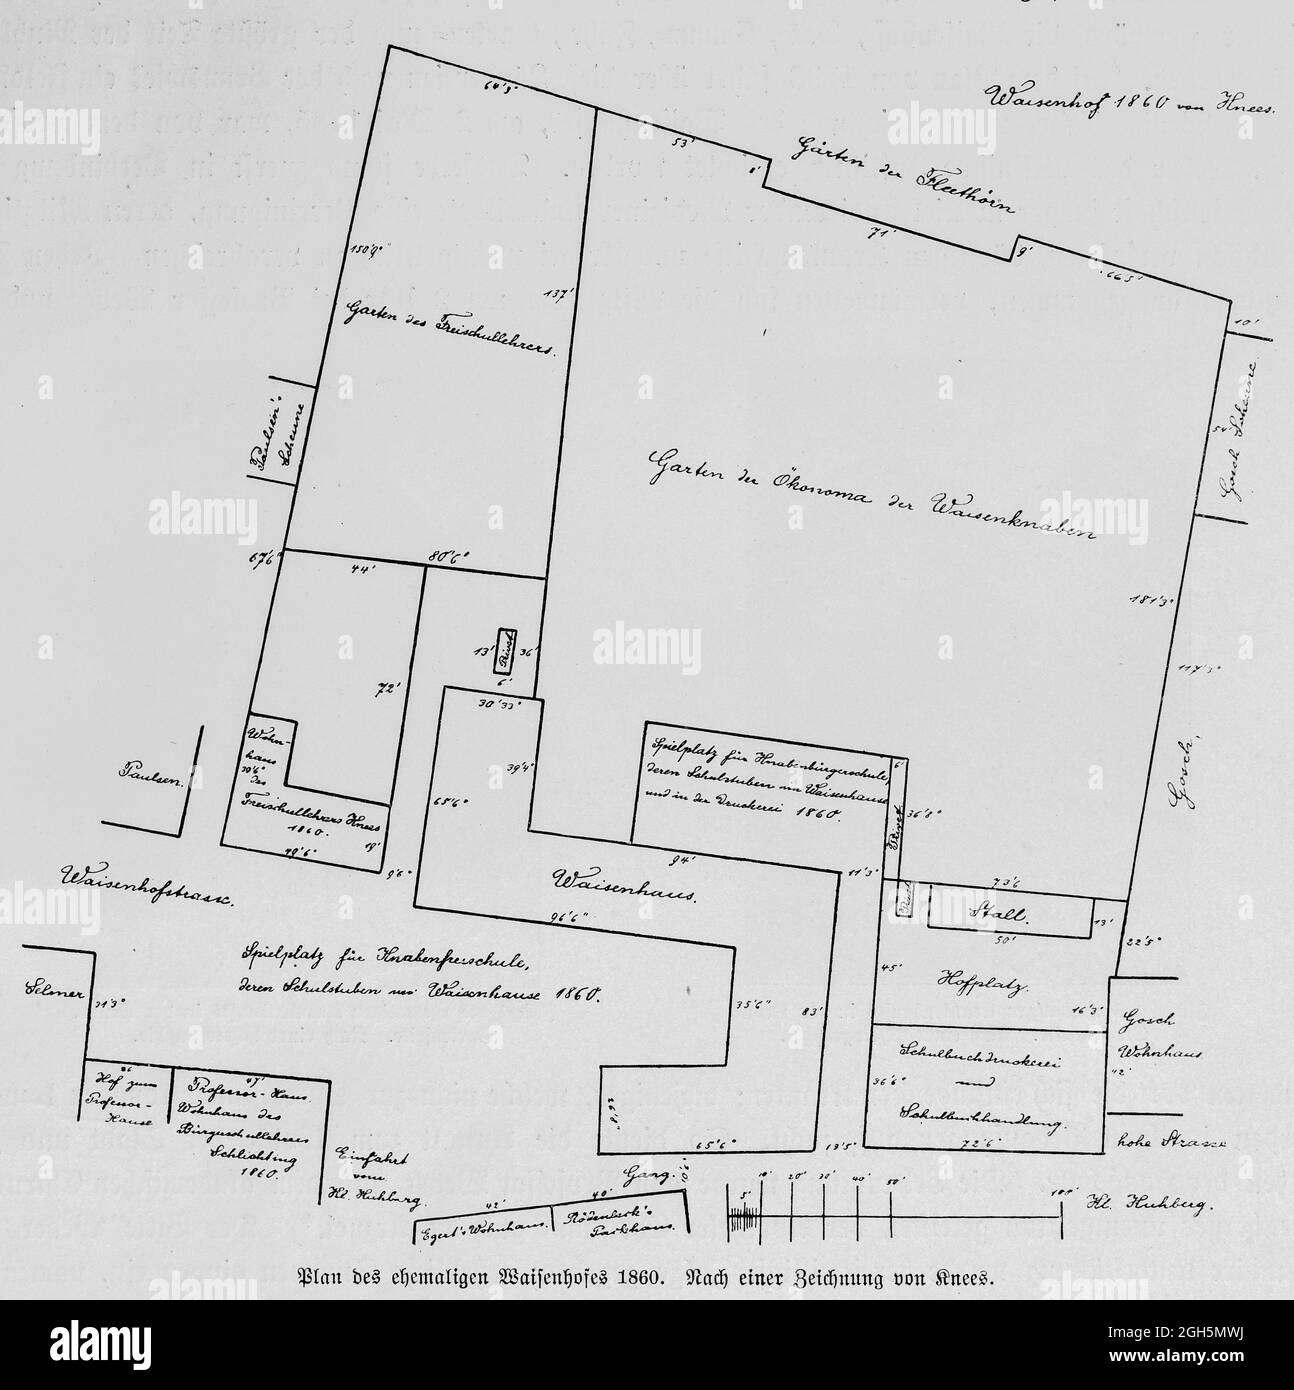 Plan des ehemaligen  Waisenhofes 1860 or  Floor Plan of the former Orphanage 1860, engraving 1899, Kiel, Schleswig-Holstein, Germany, Stock Photo